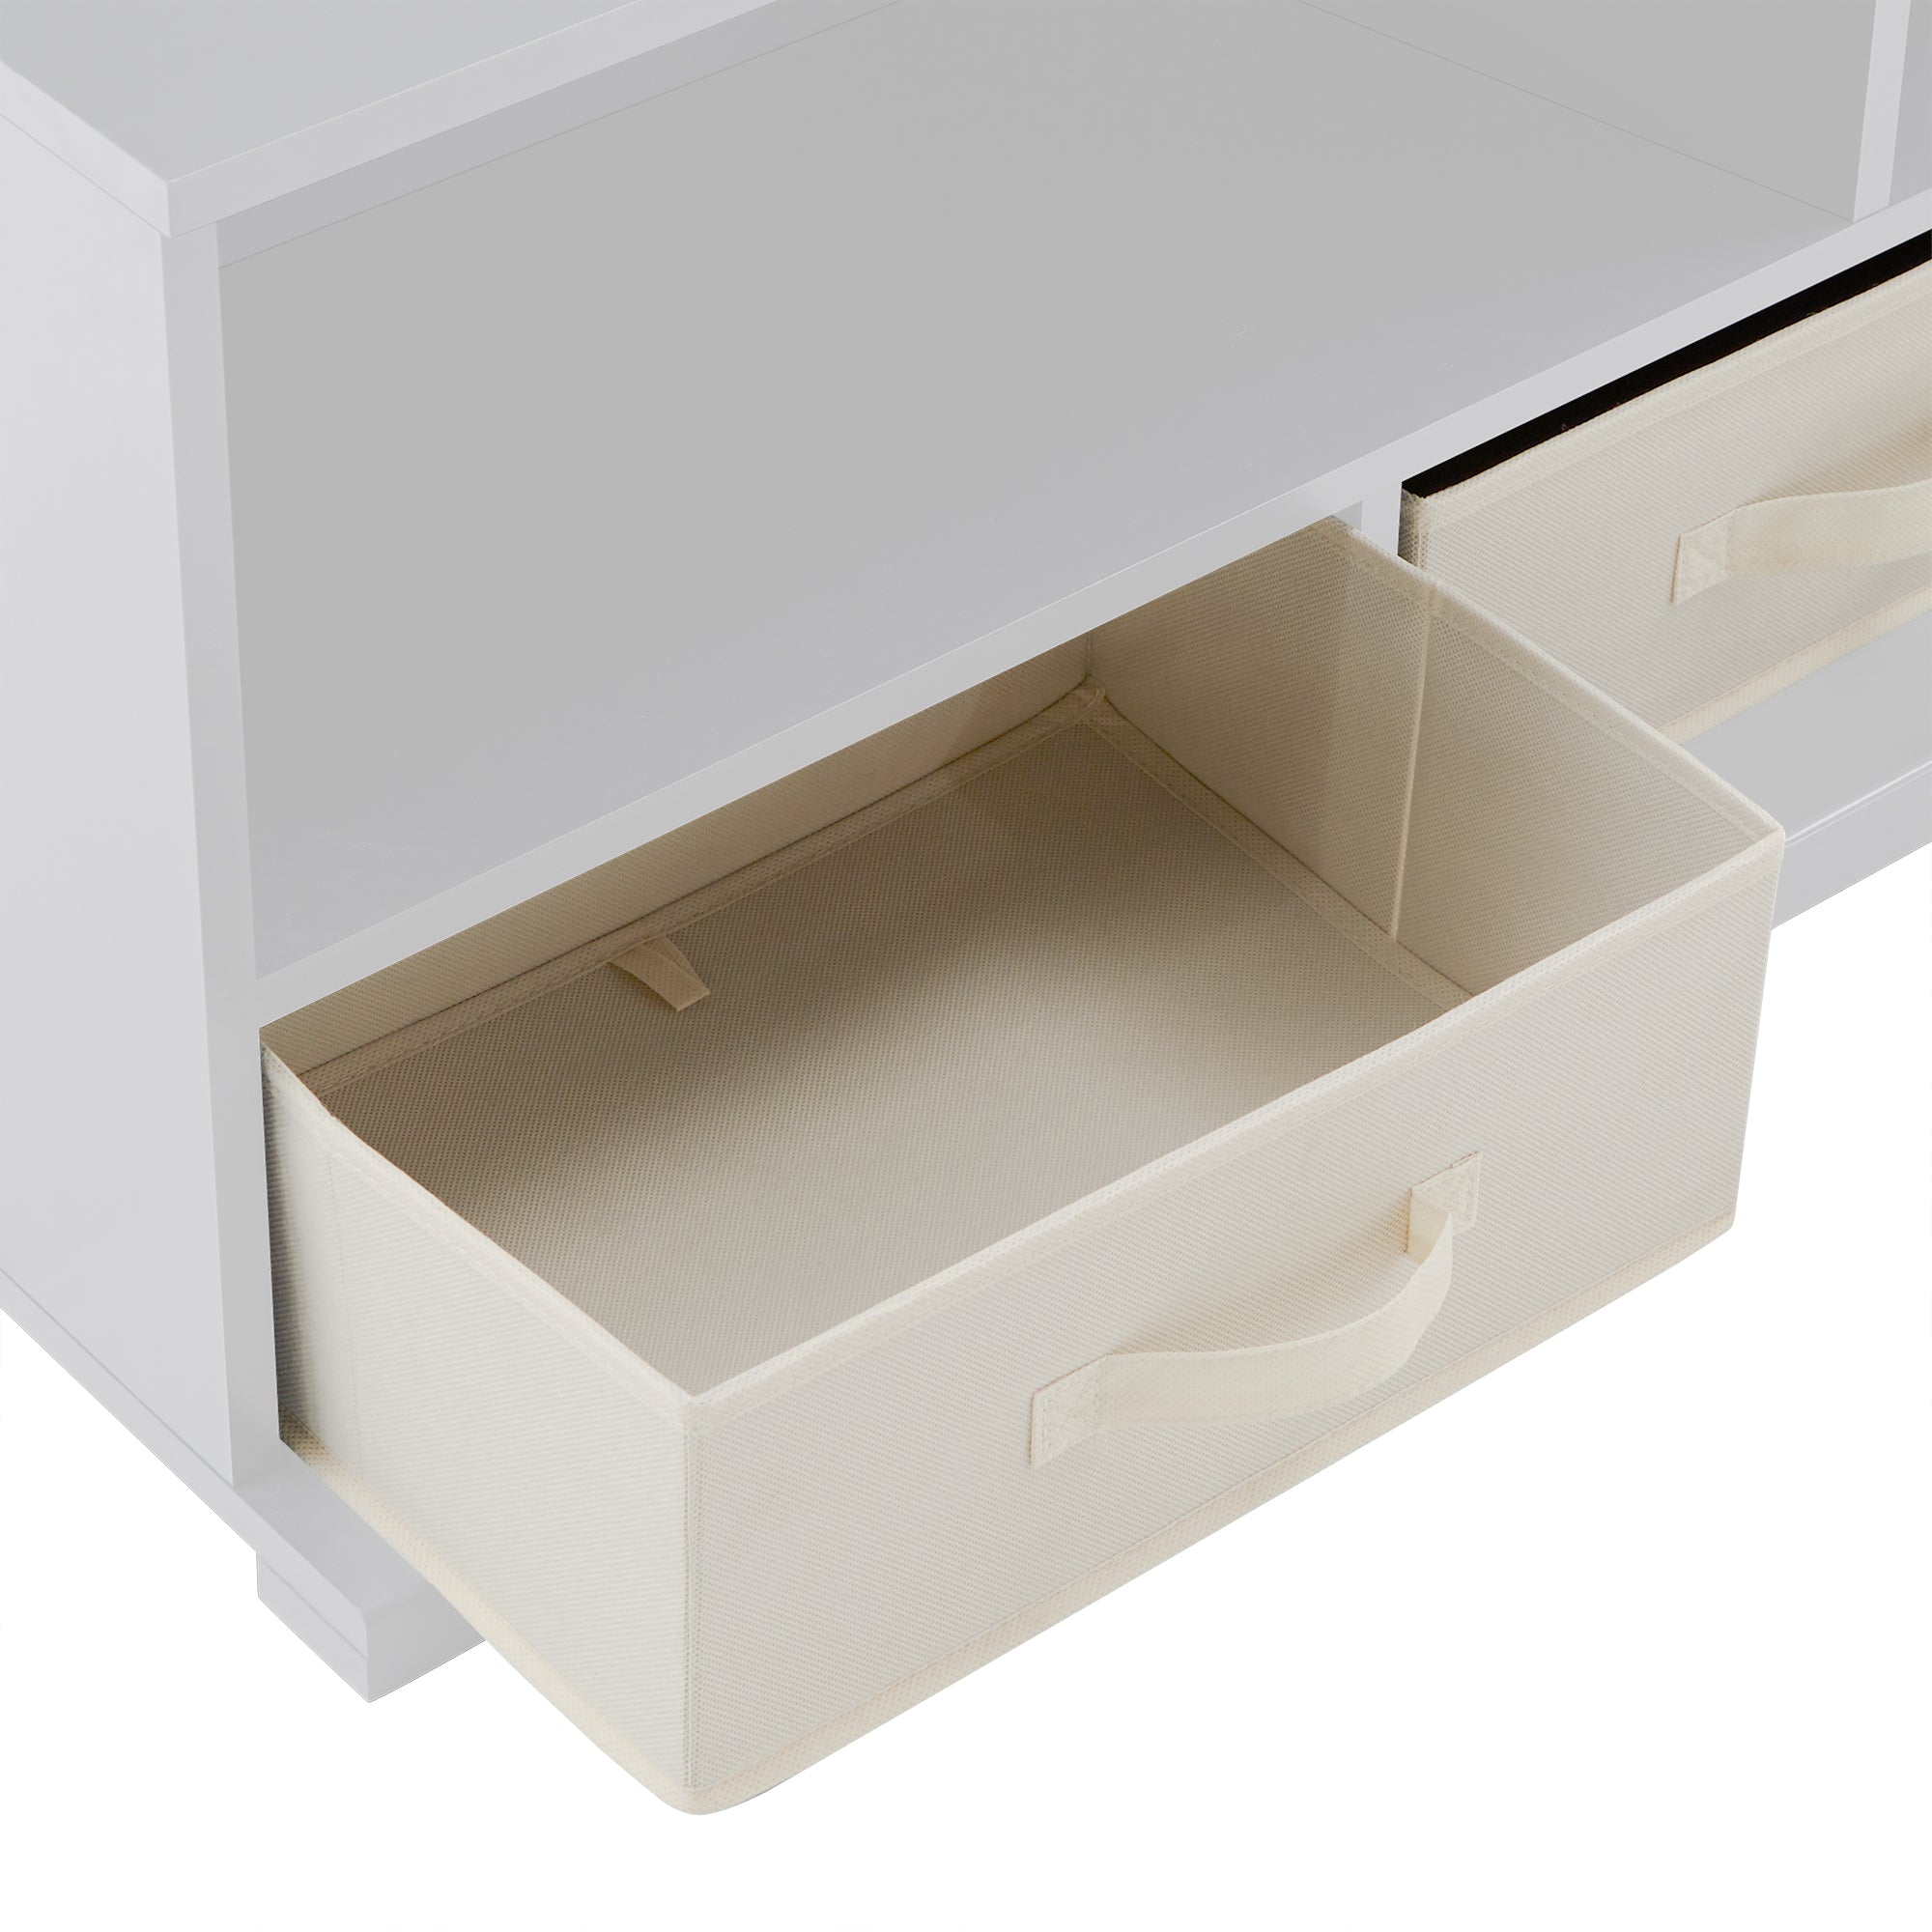 Modular Stacking Storage Bins - White, 1 Box with three (3) Drawers